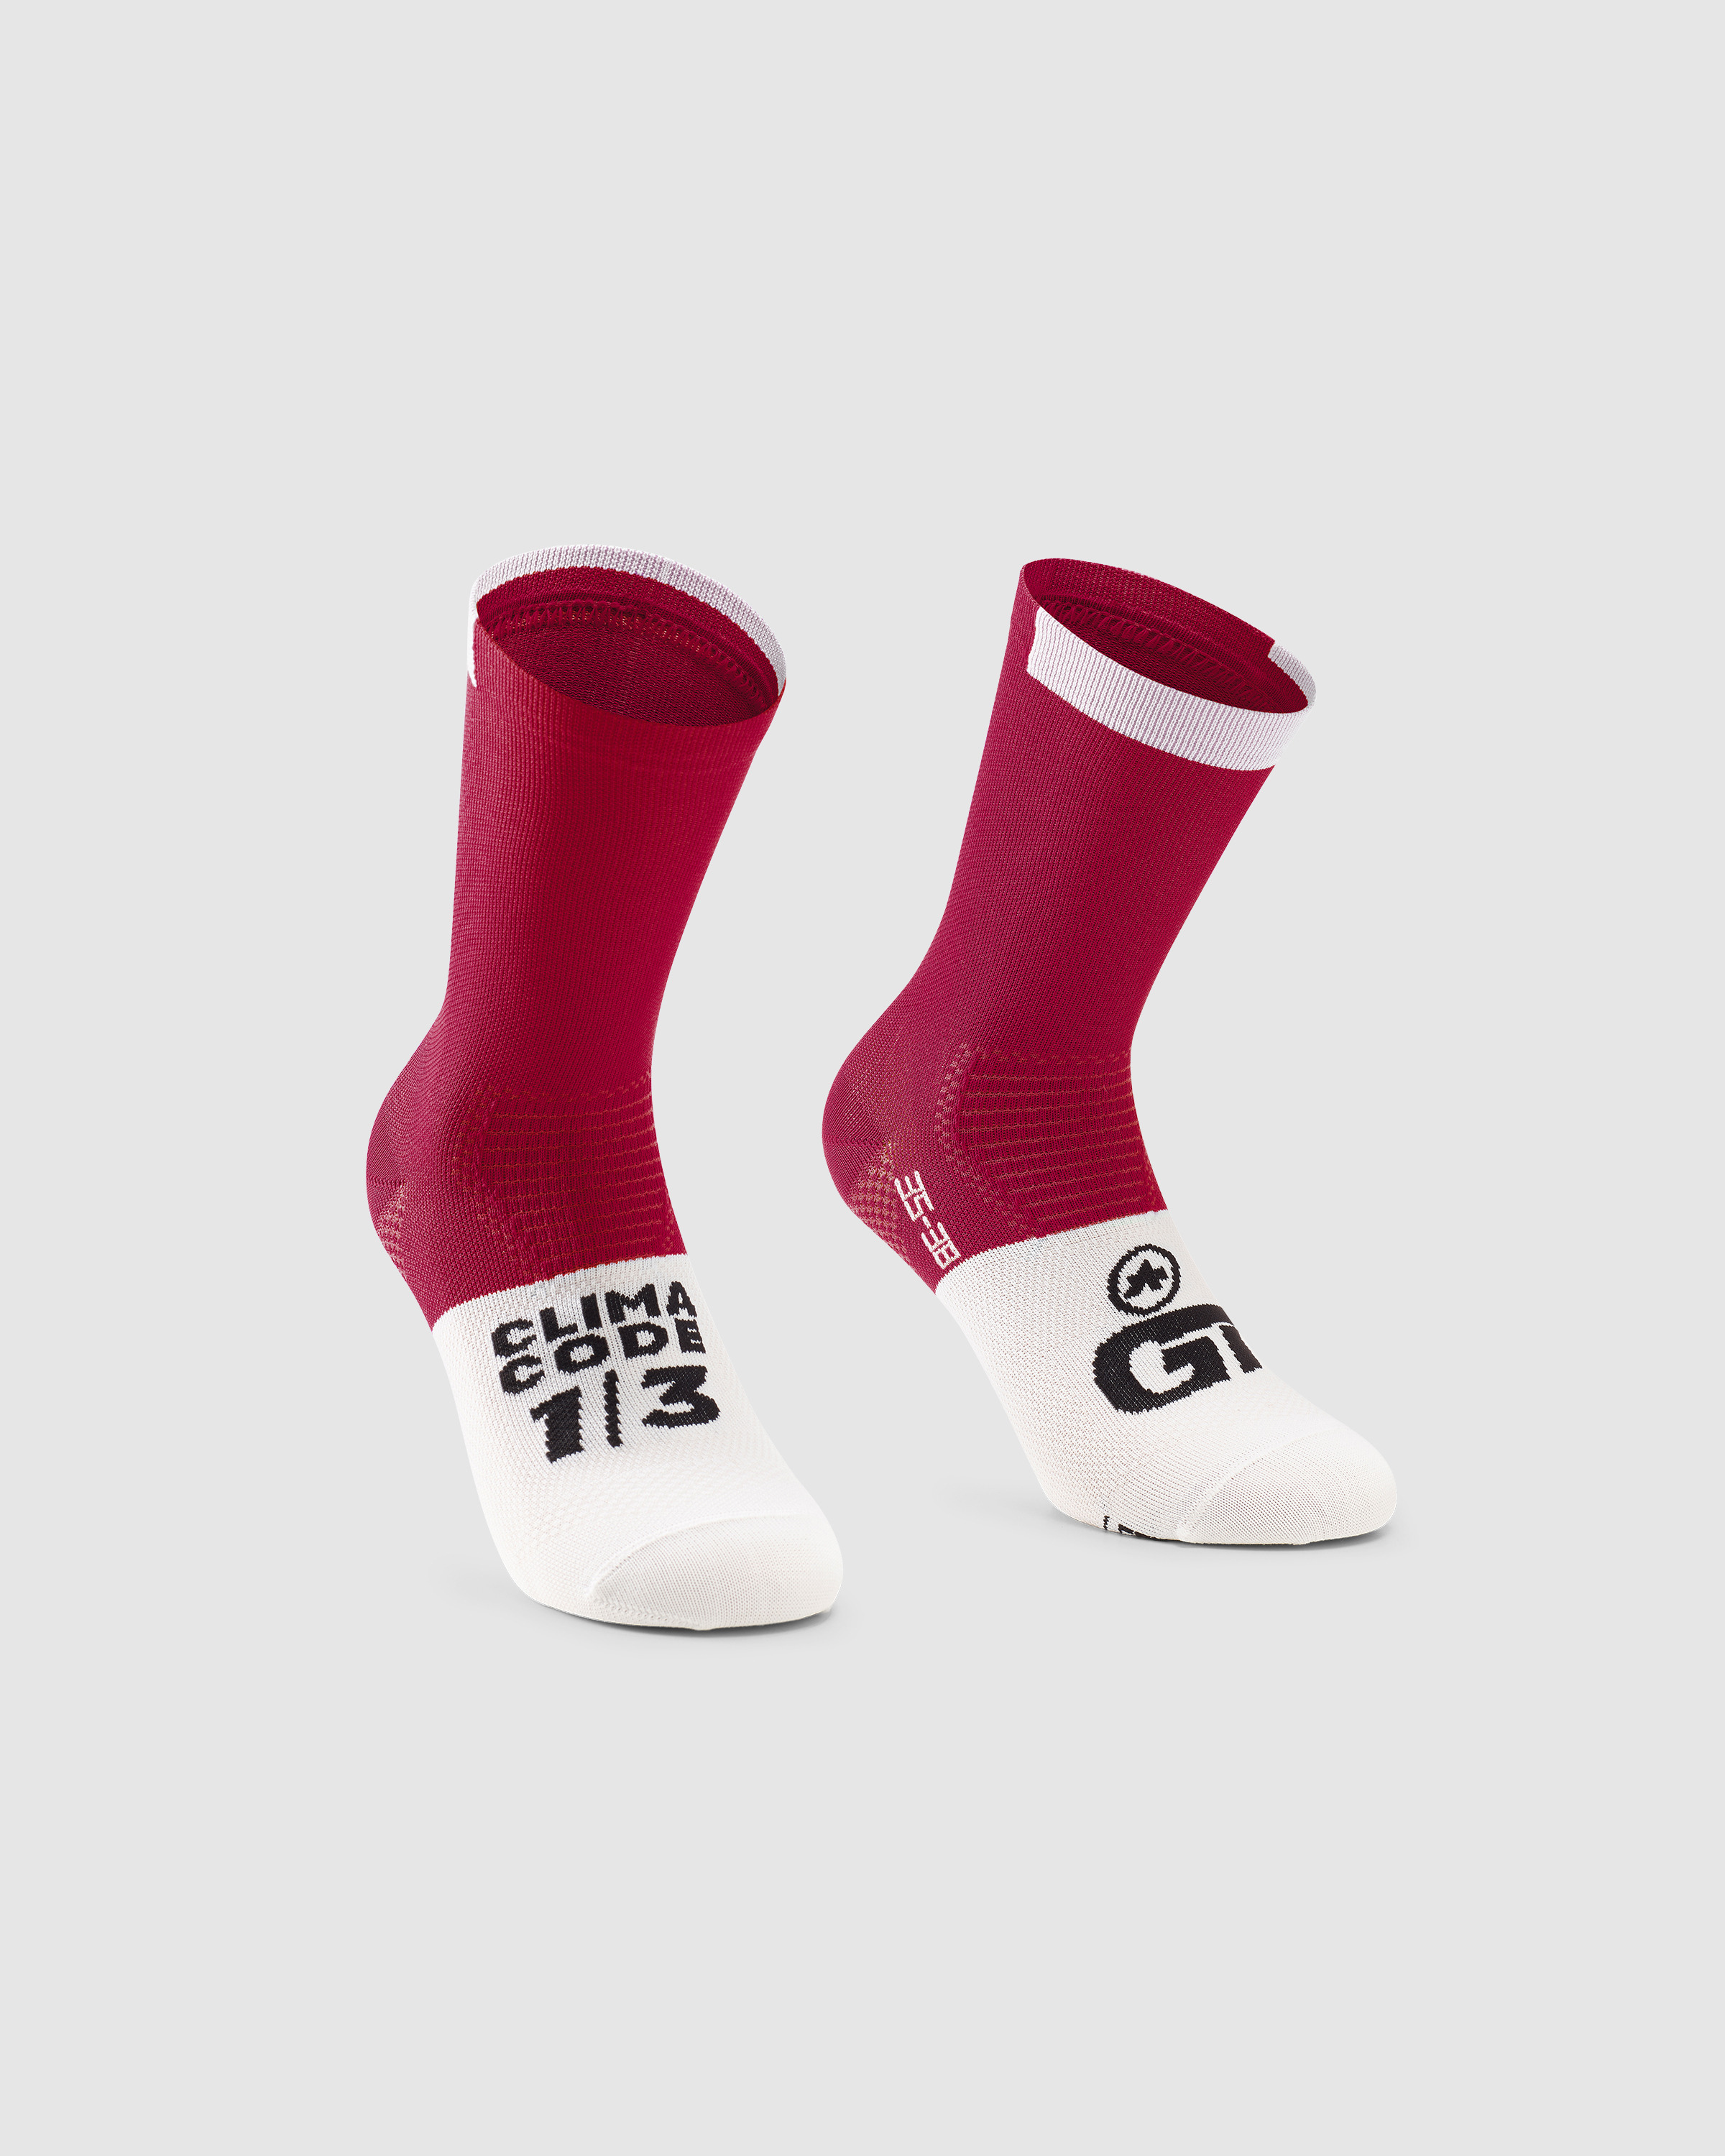 GT Socks C2 - ASSOS Of Switzerland - Official Outlet